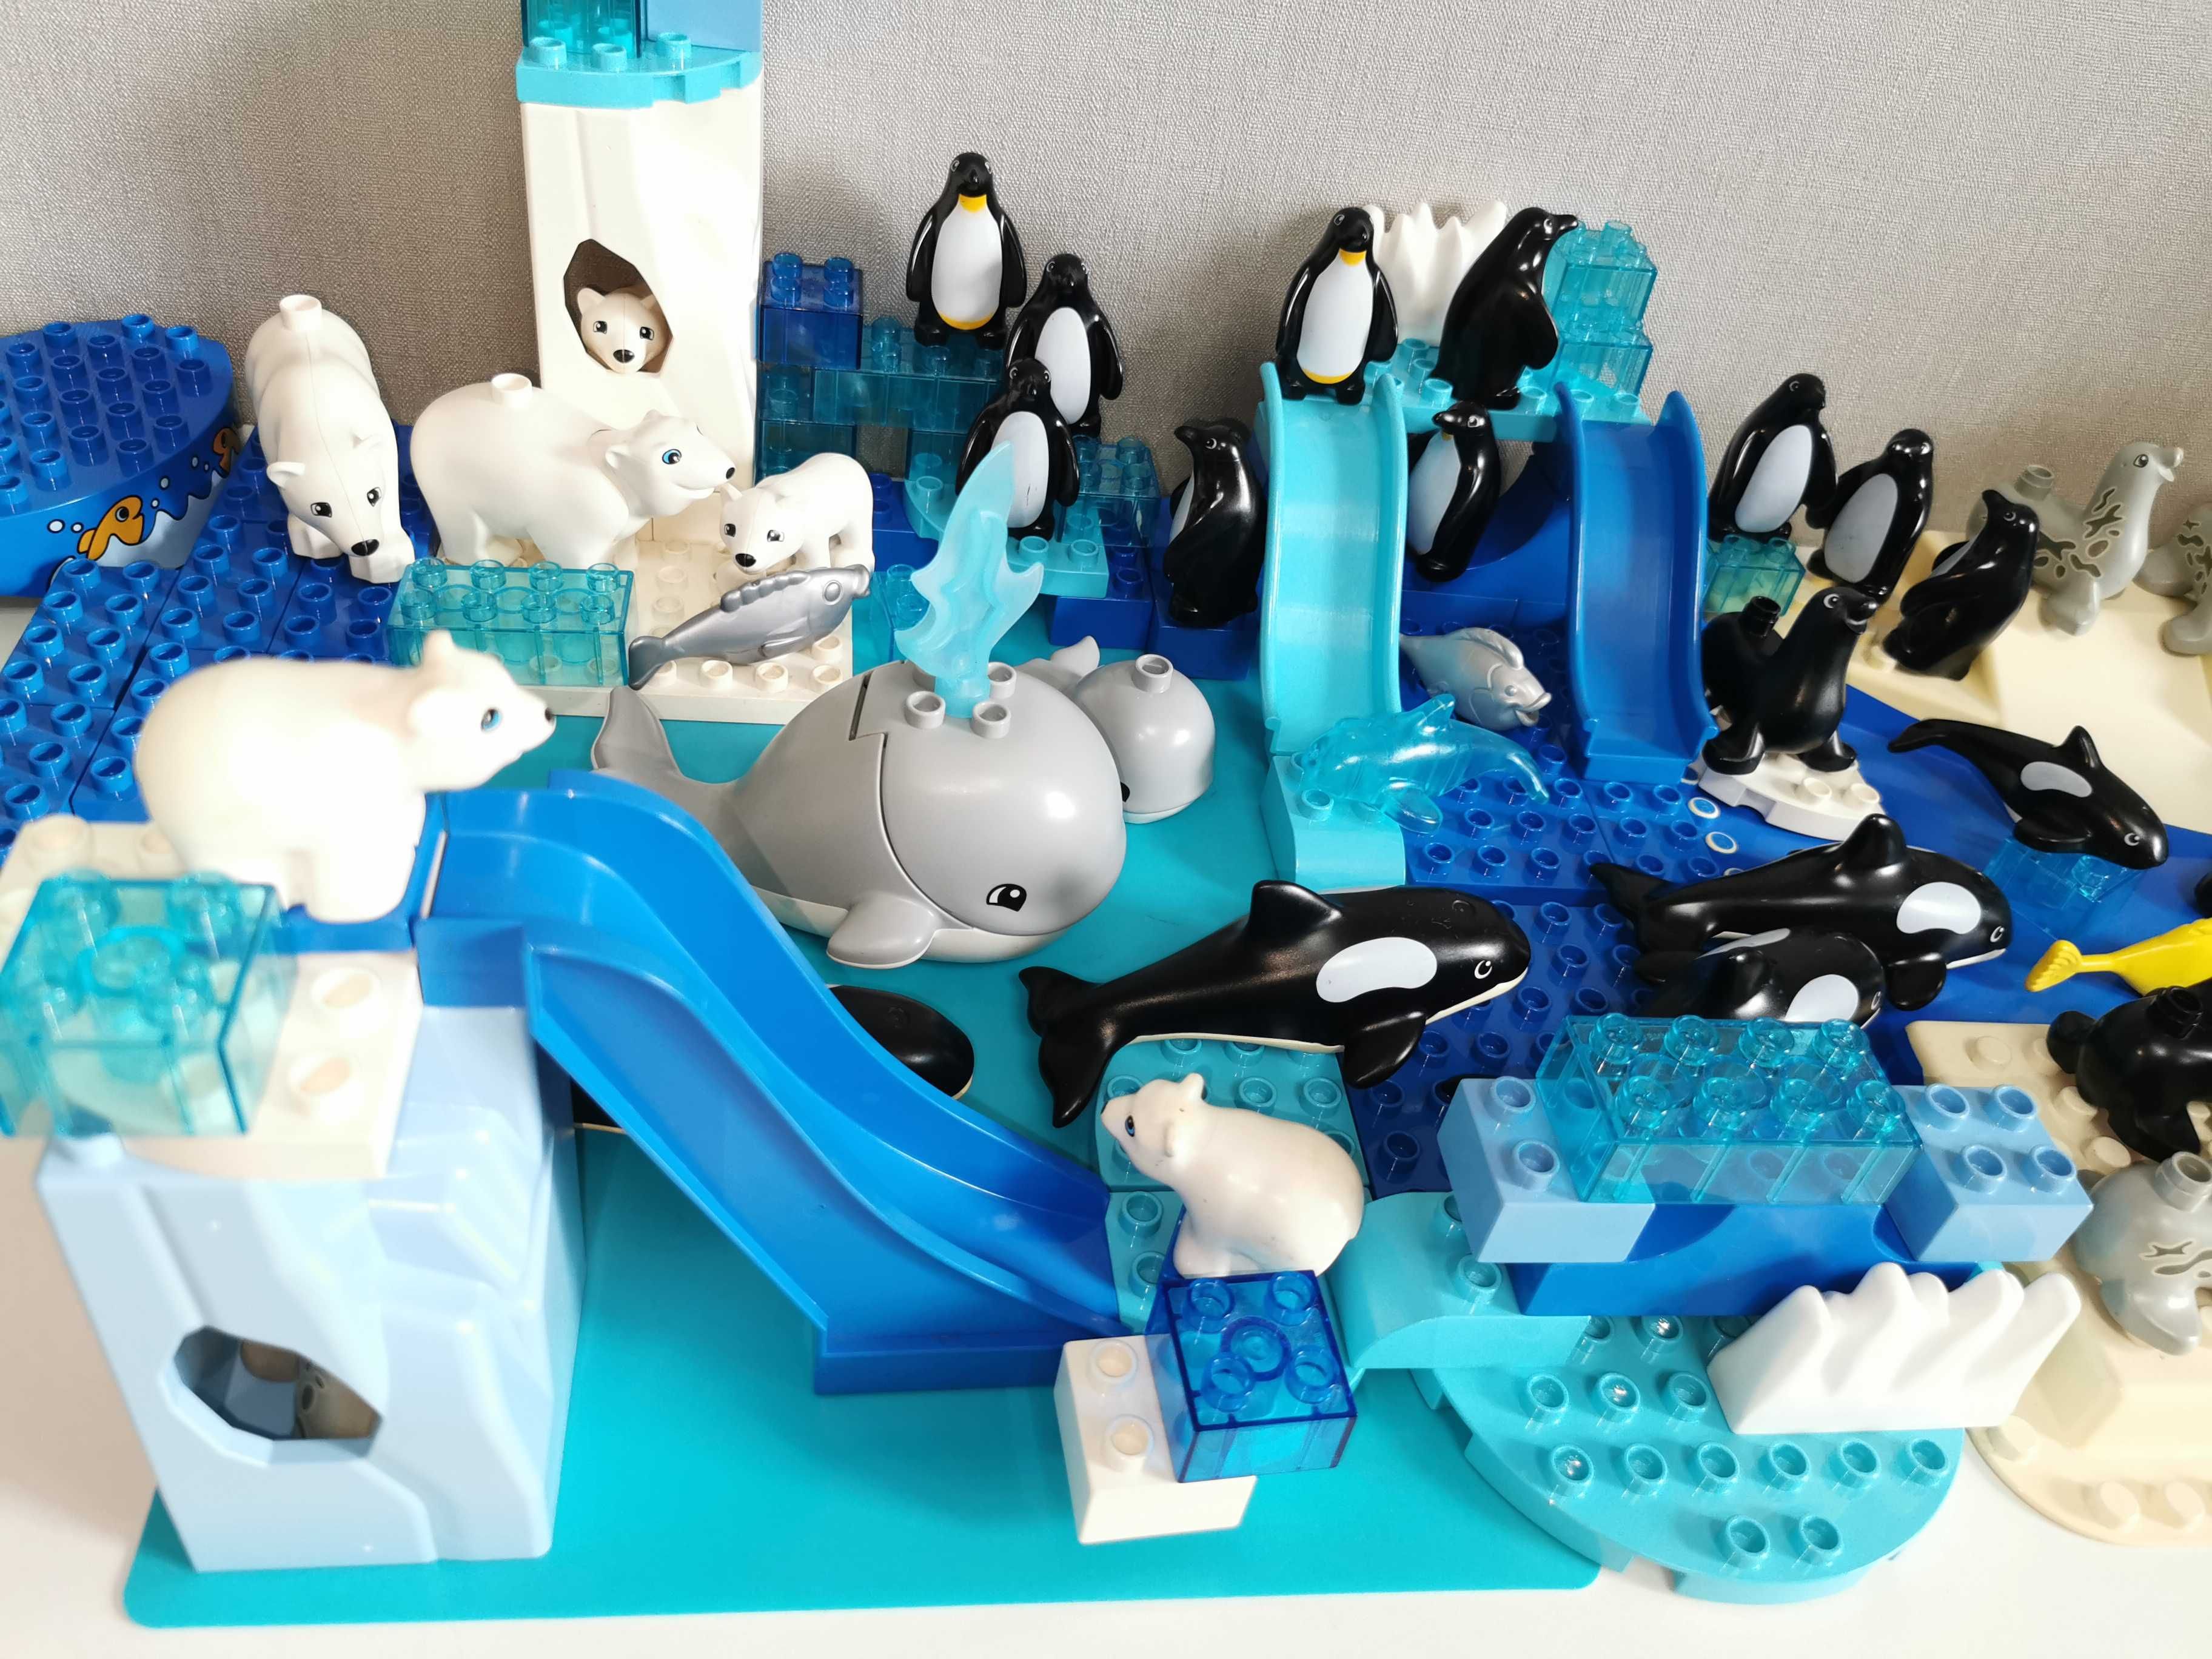 Lego Duplo Антарктида пластина оригинал